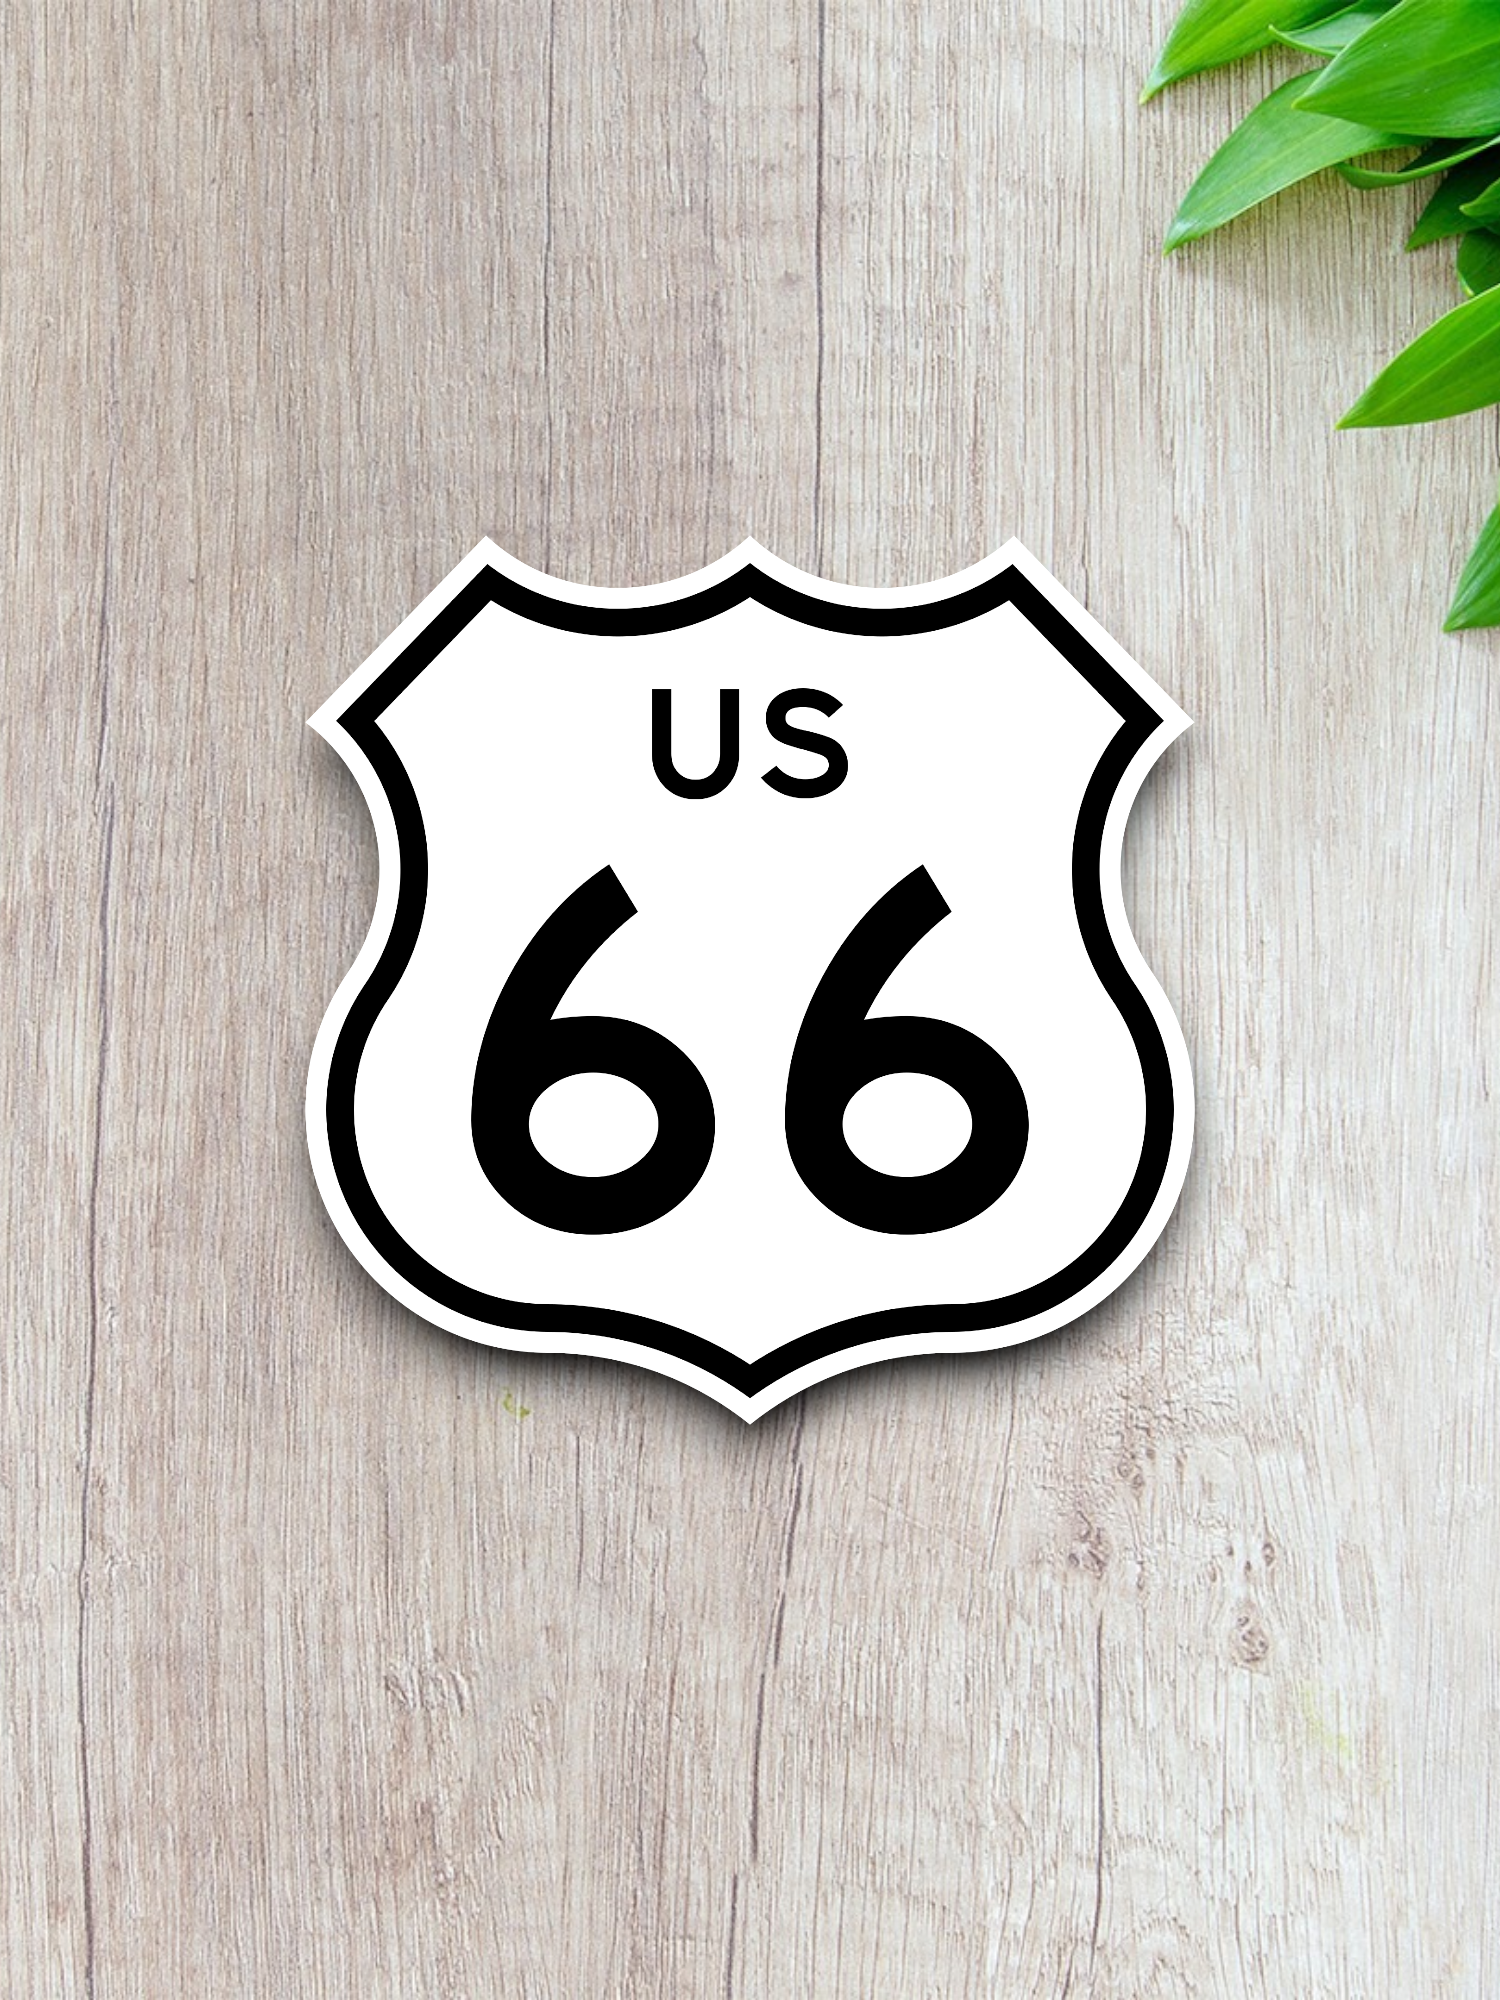 U.S. Route 66 Road Sign Sticker